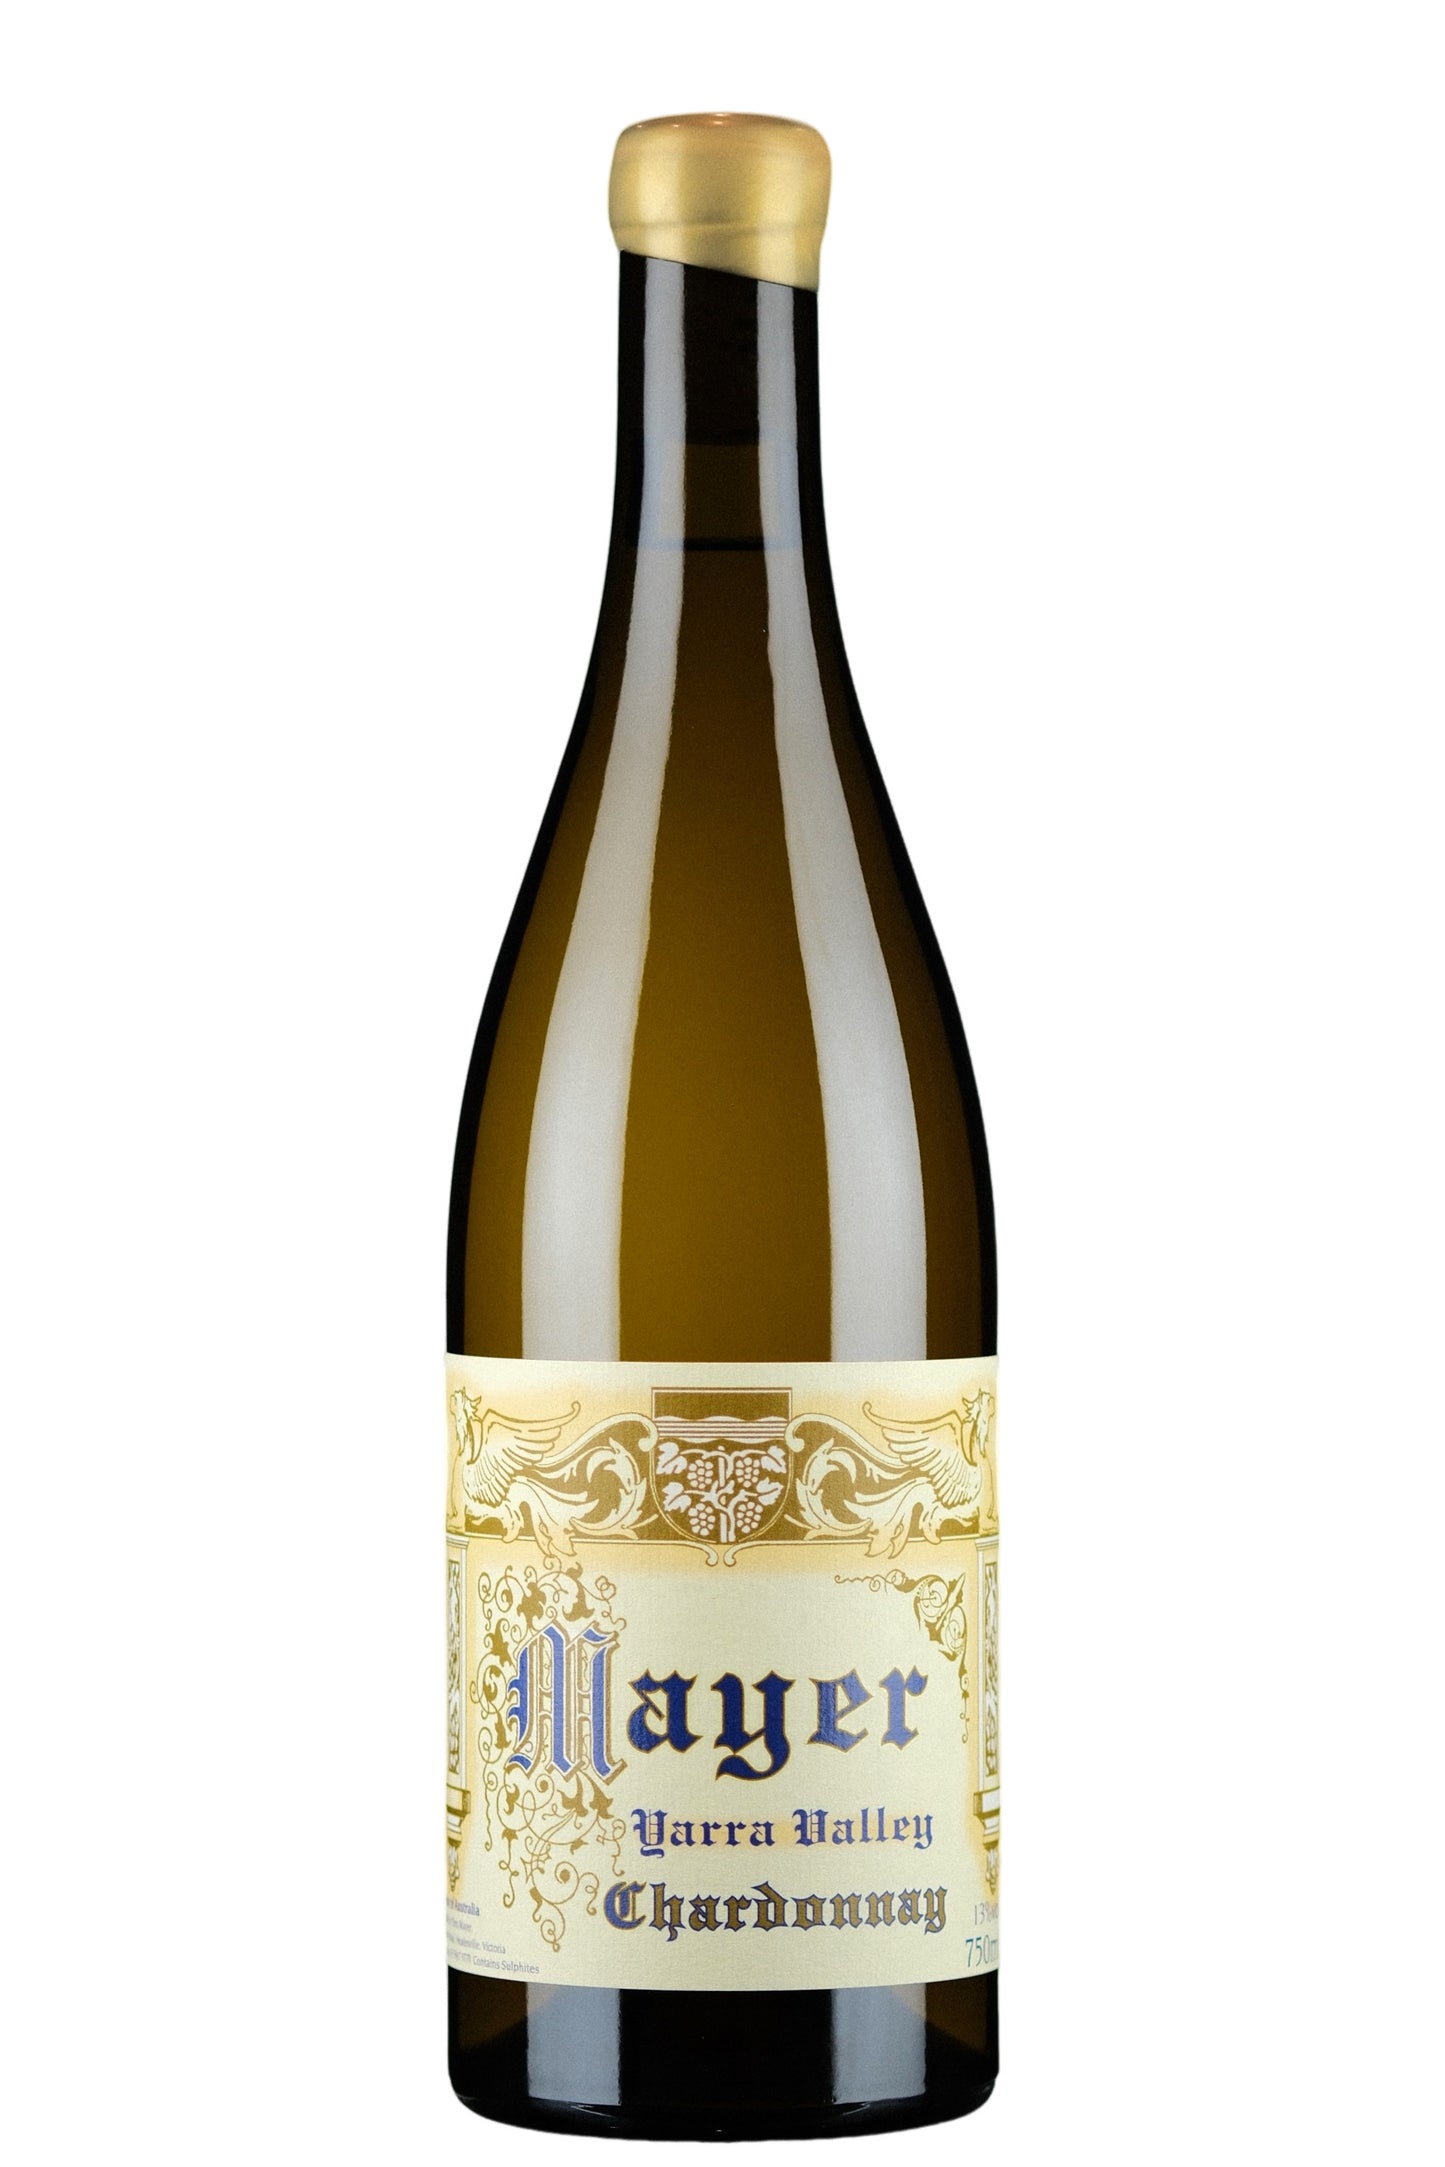 Mayer Chardonnay